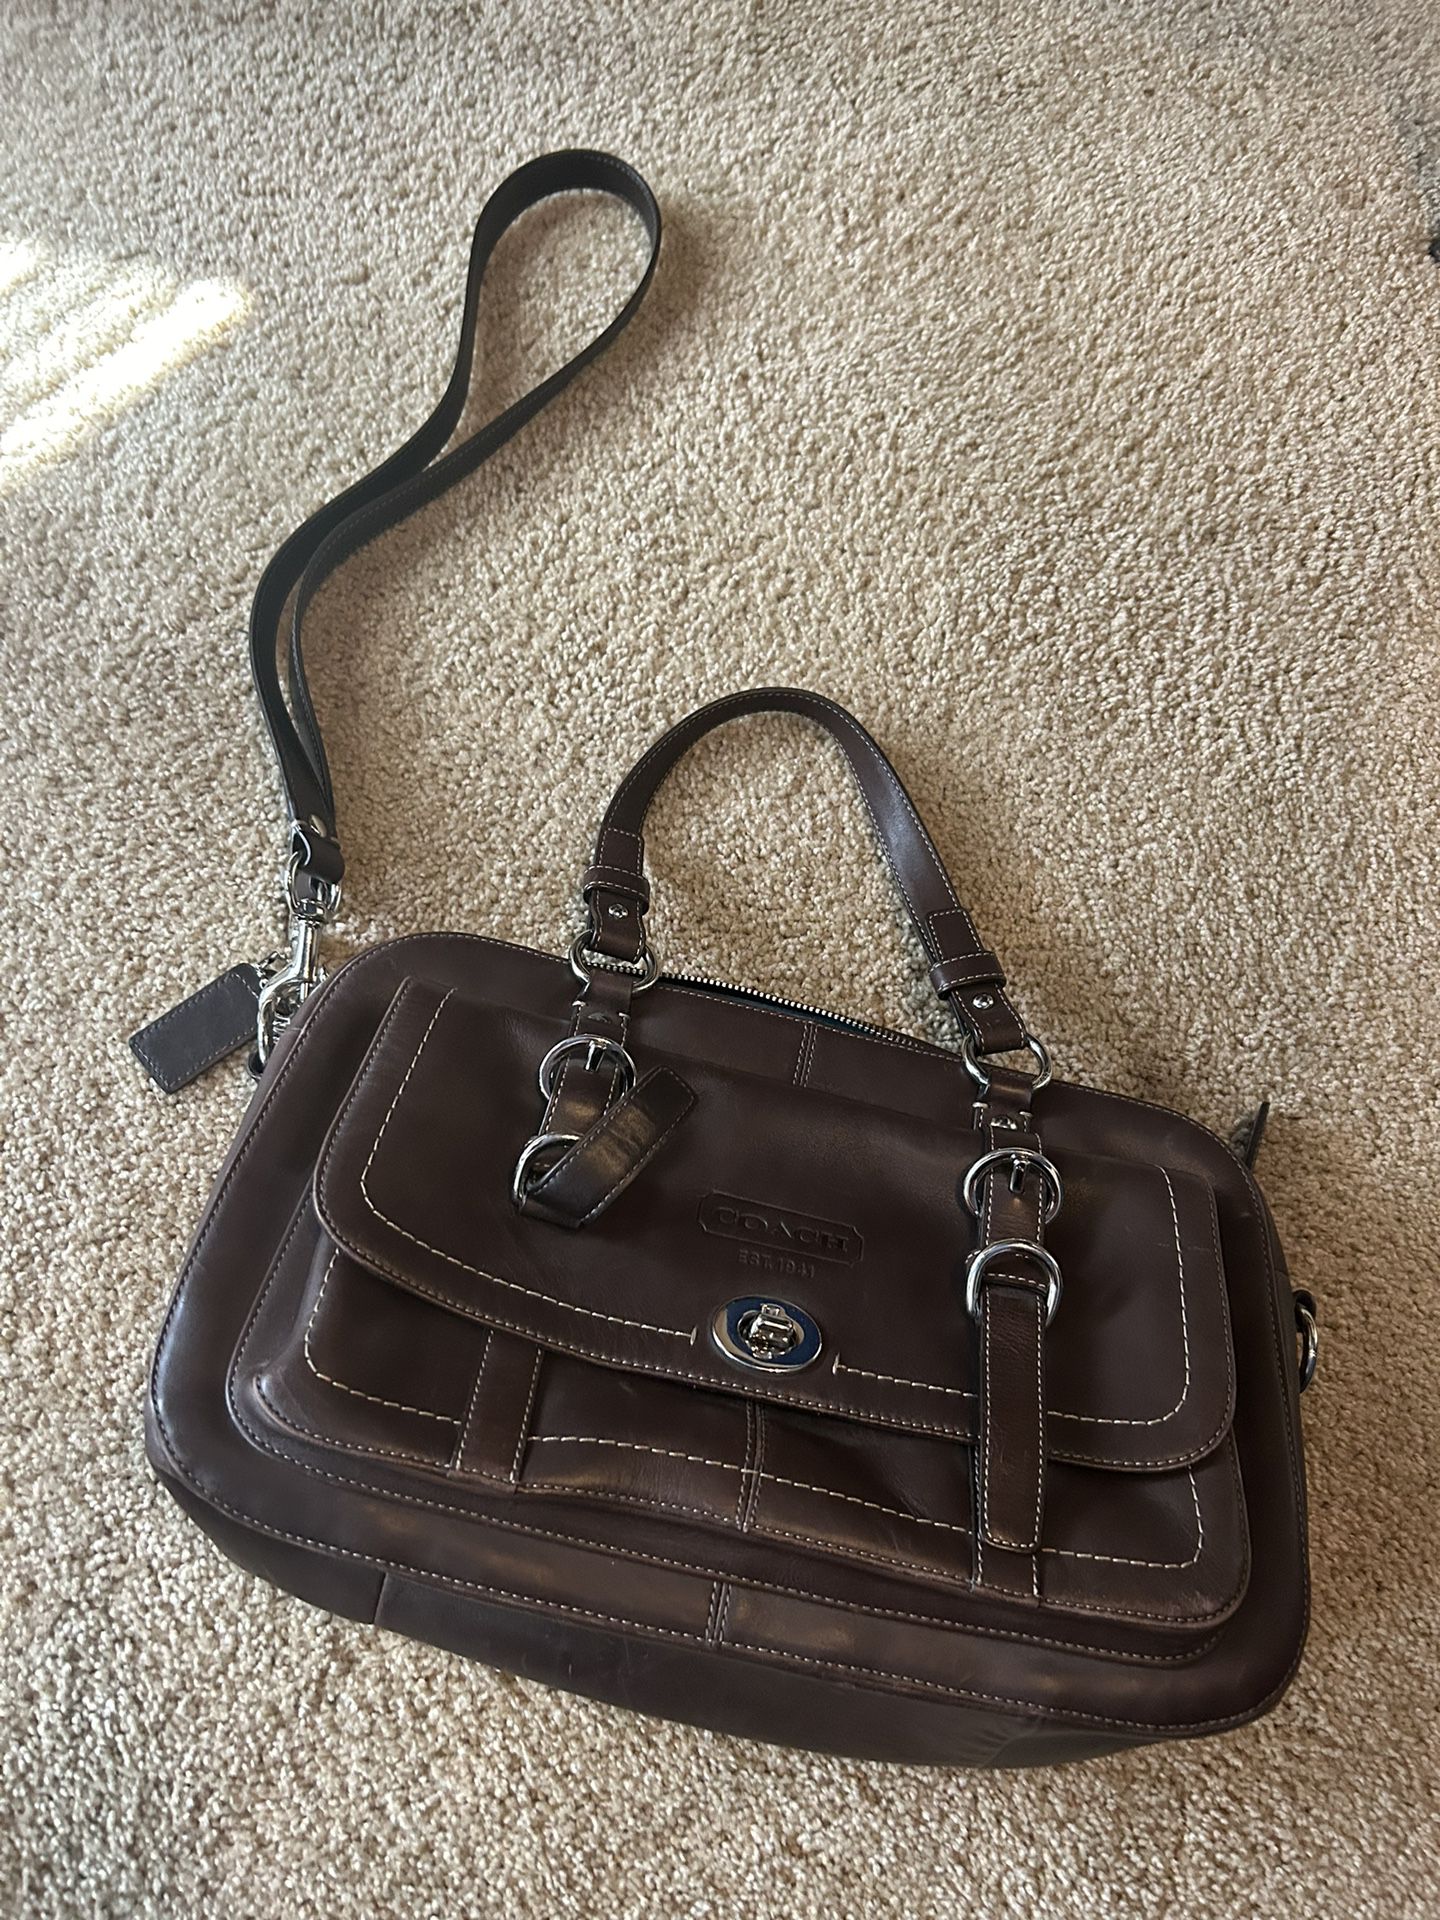 Coach Bag - Authentic Leather 